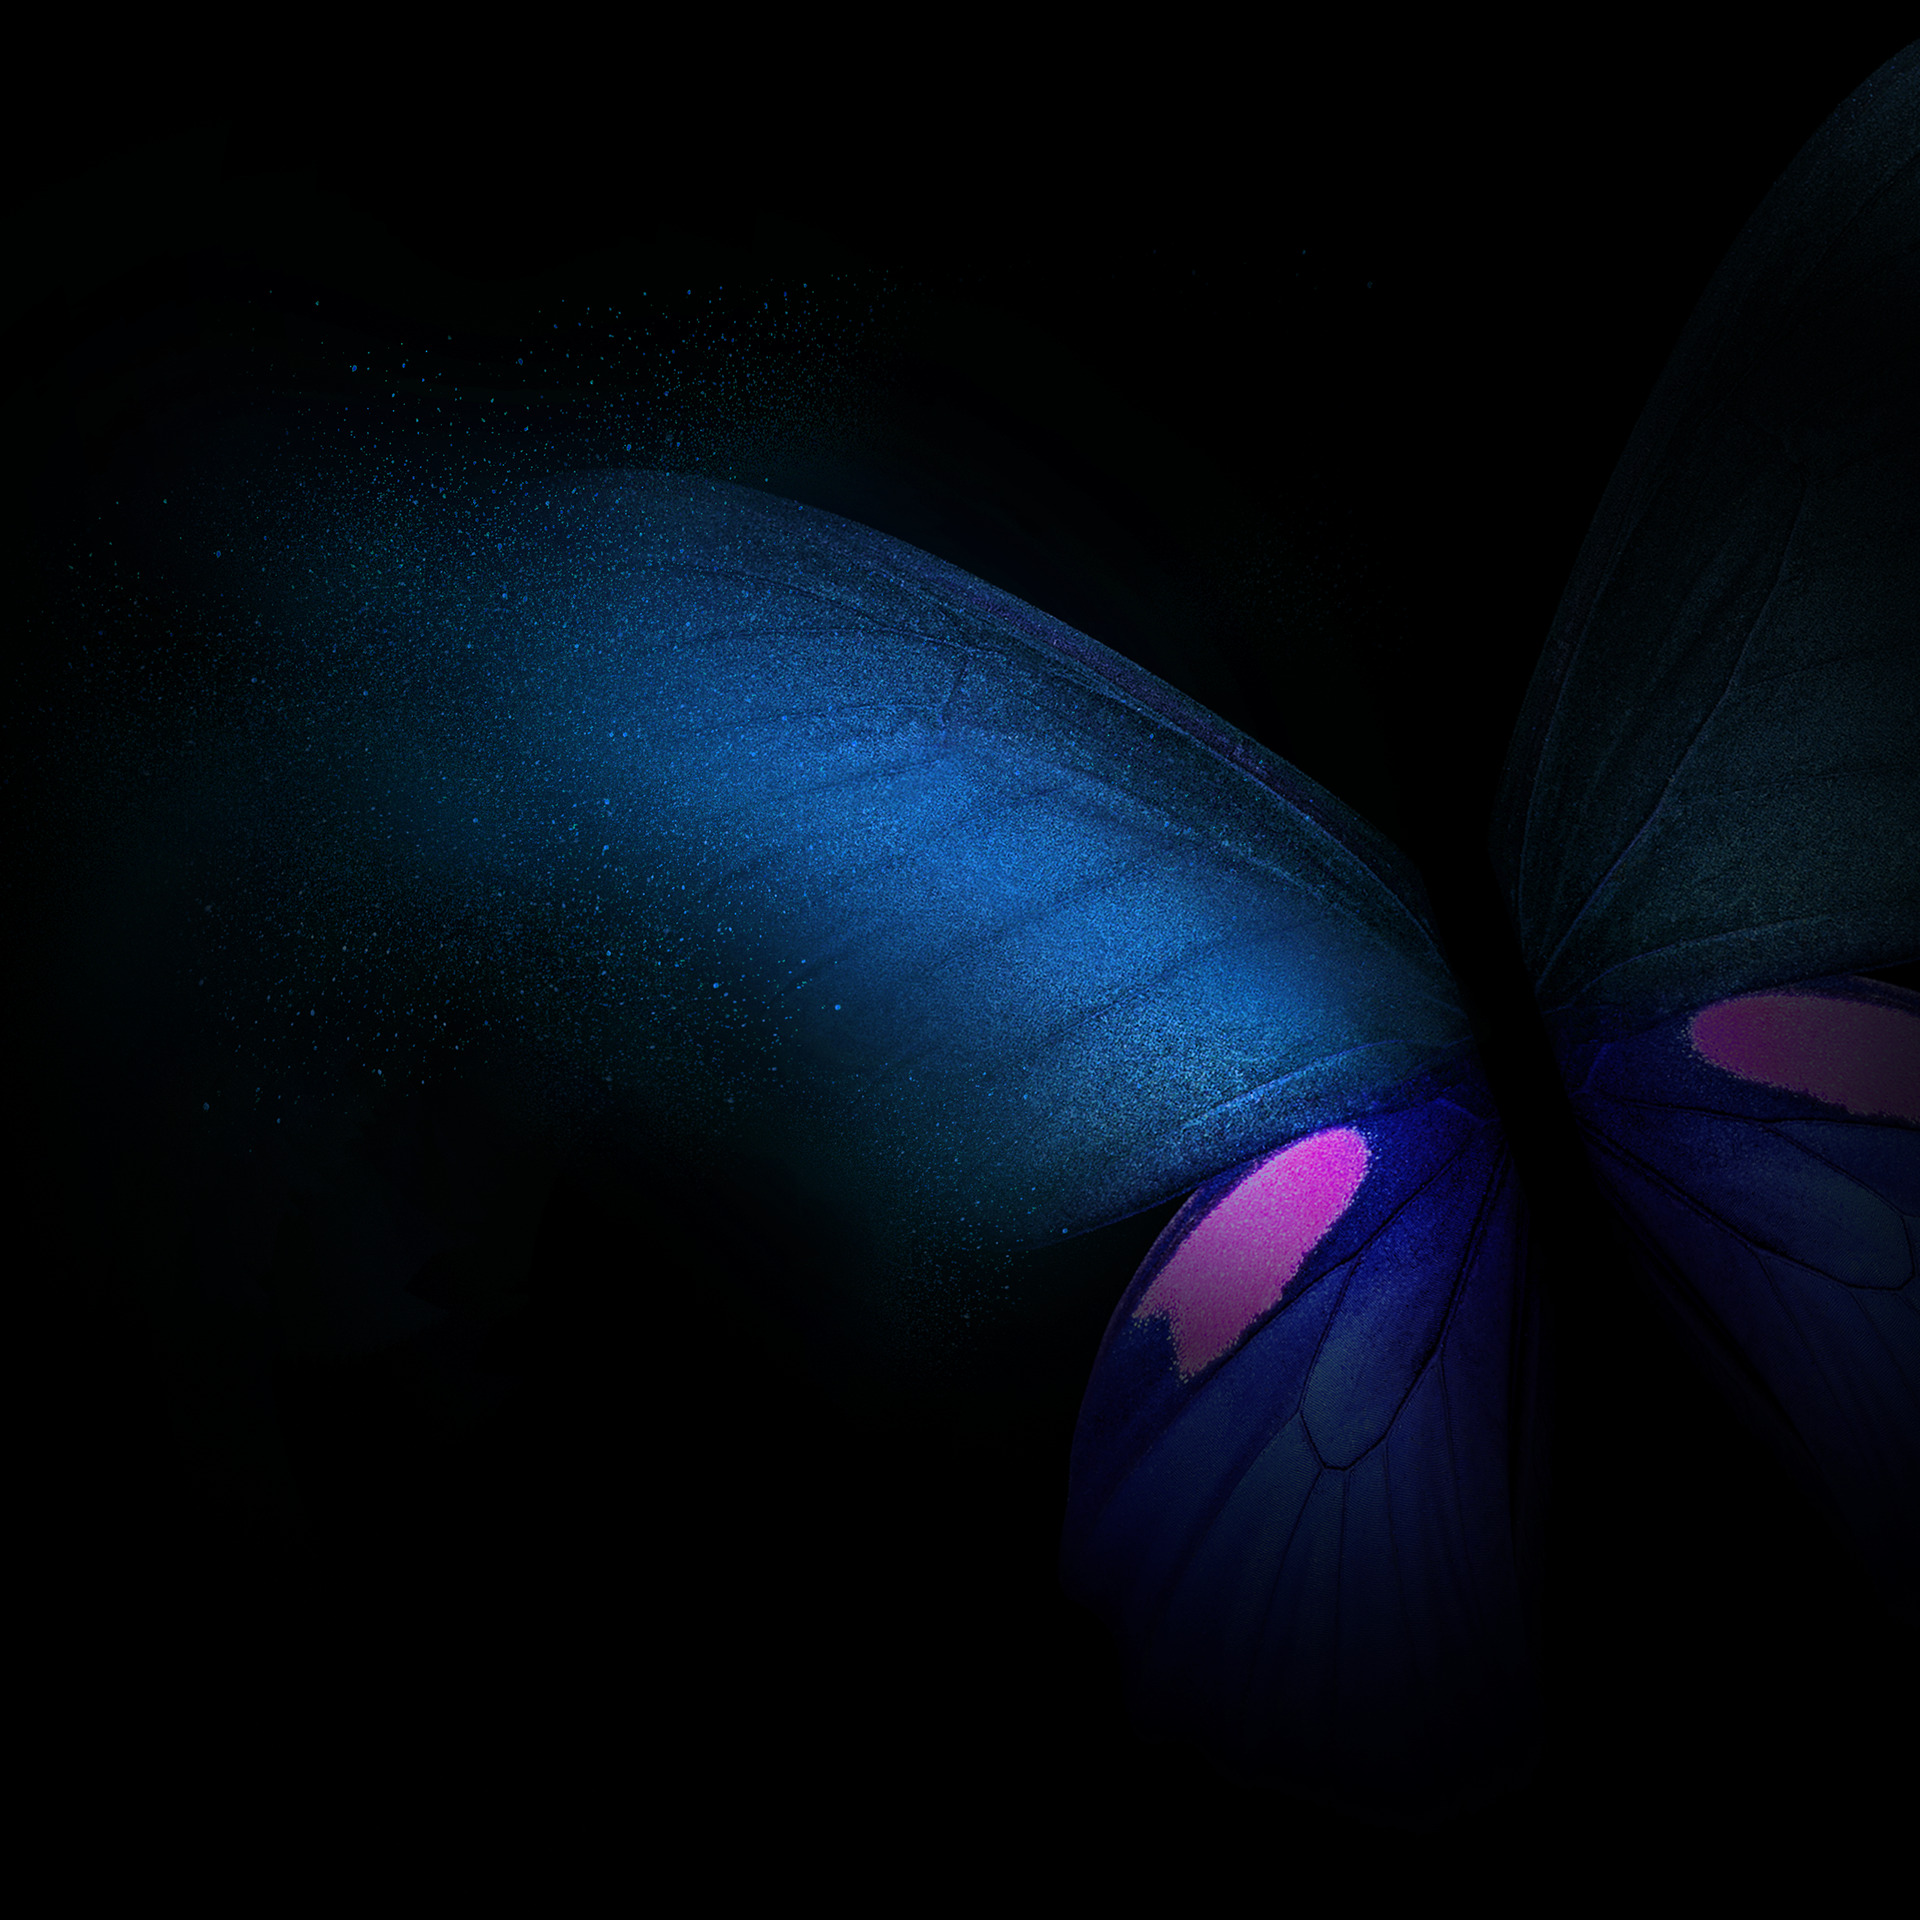 mariposa live wallpaper,azul,oscuridad,ligero,atmósfera,azul eléctrico